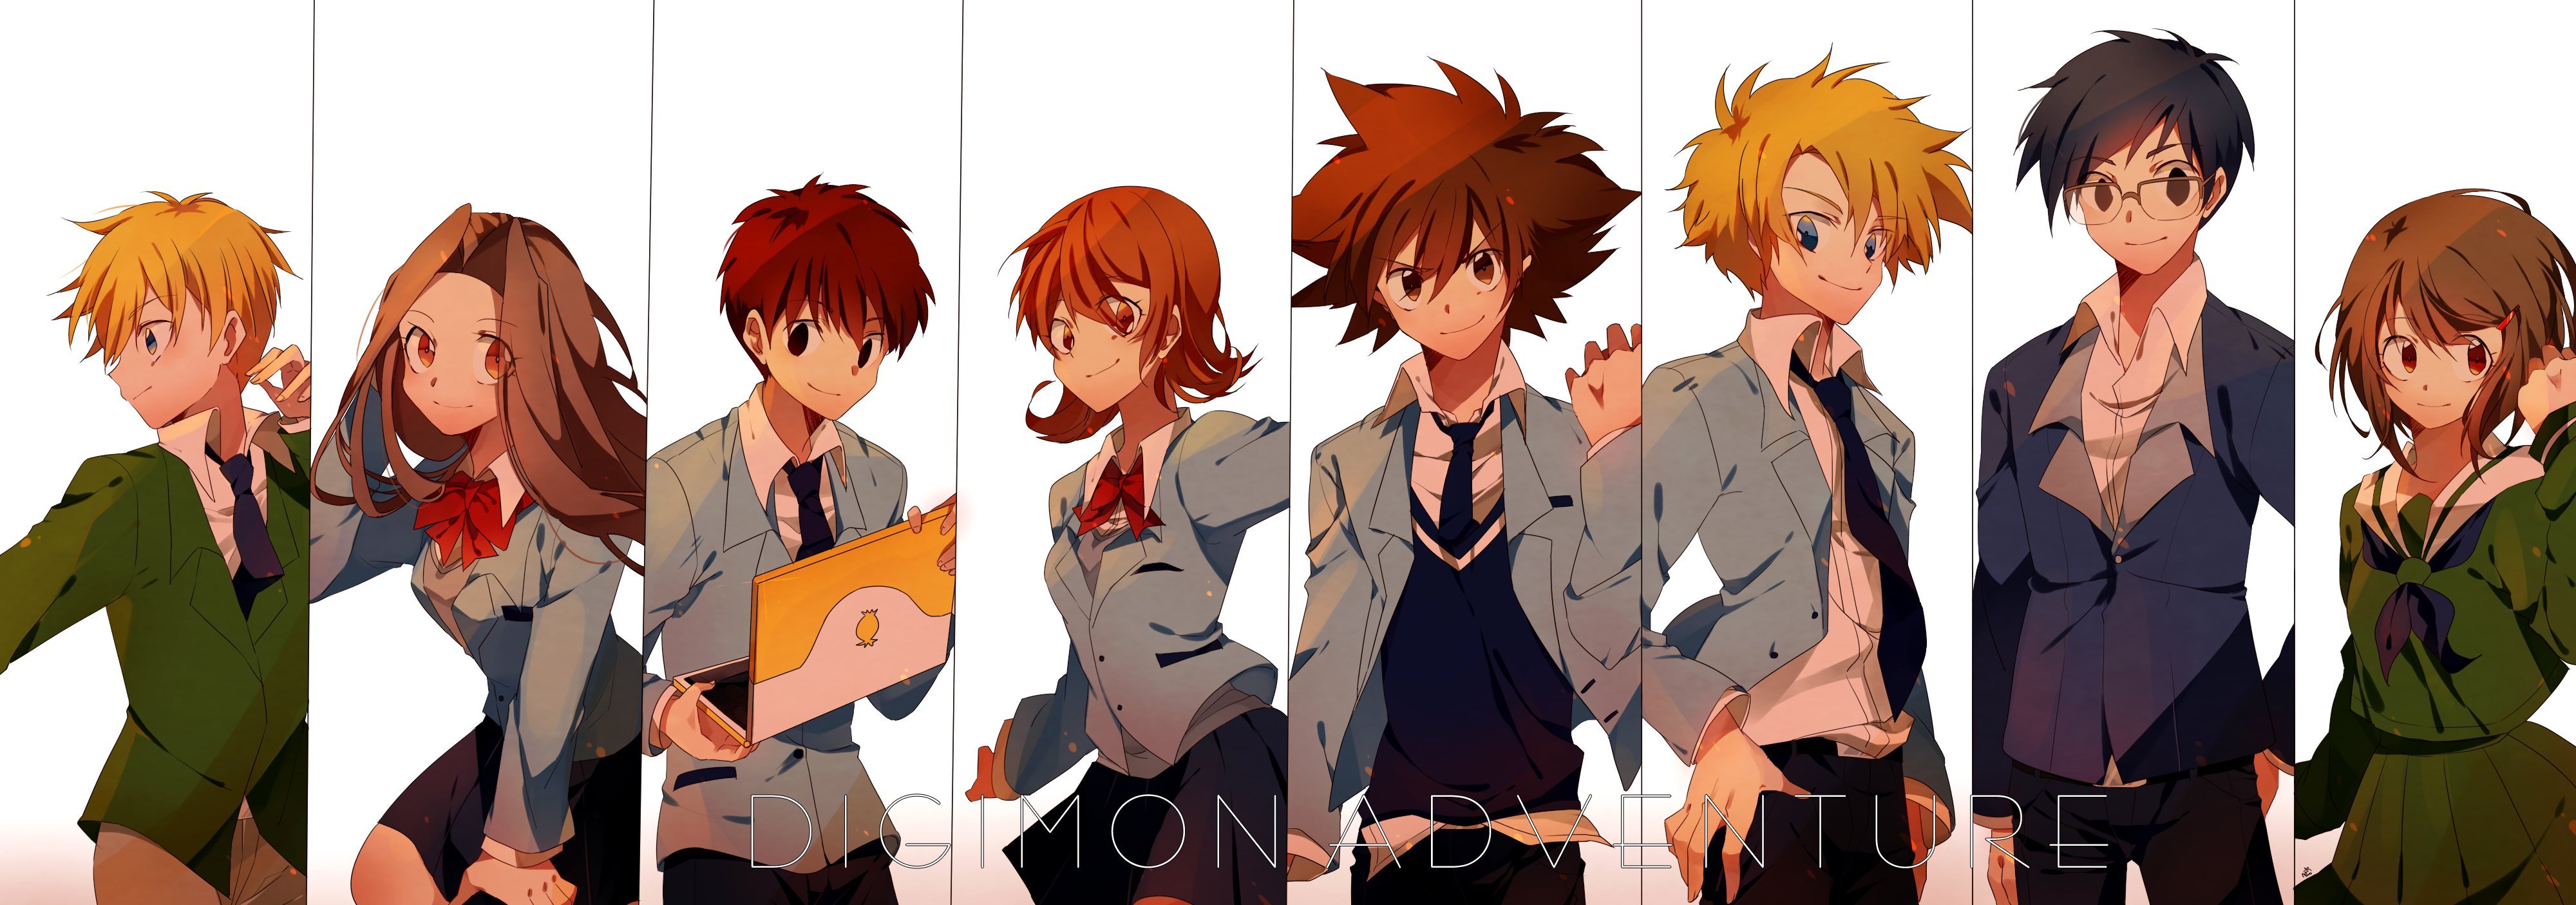 digimon, Adventures, Digimon, Kido, Jyou, Izumi, Koushirou, Yagami, Hikari Wallpaper